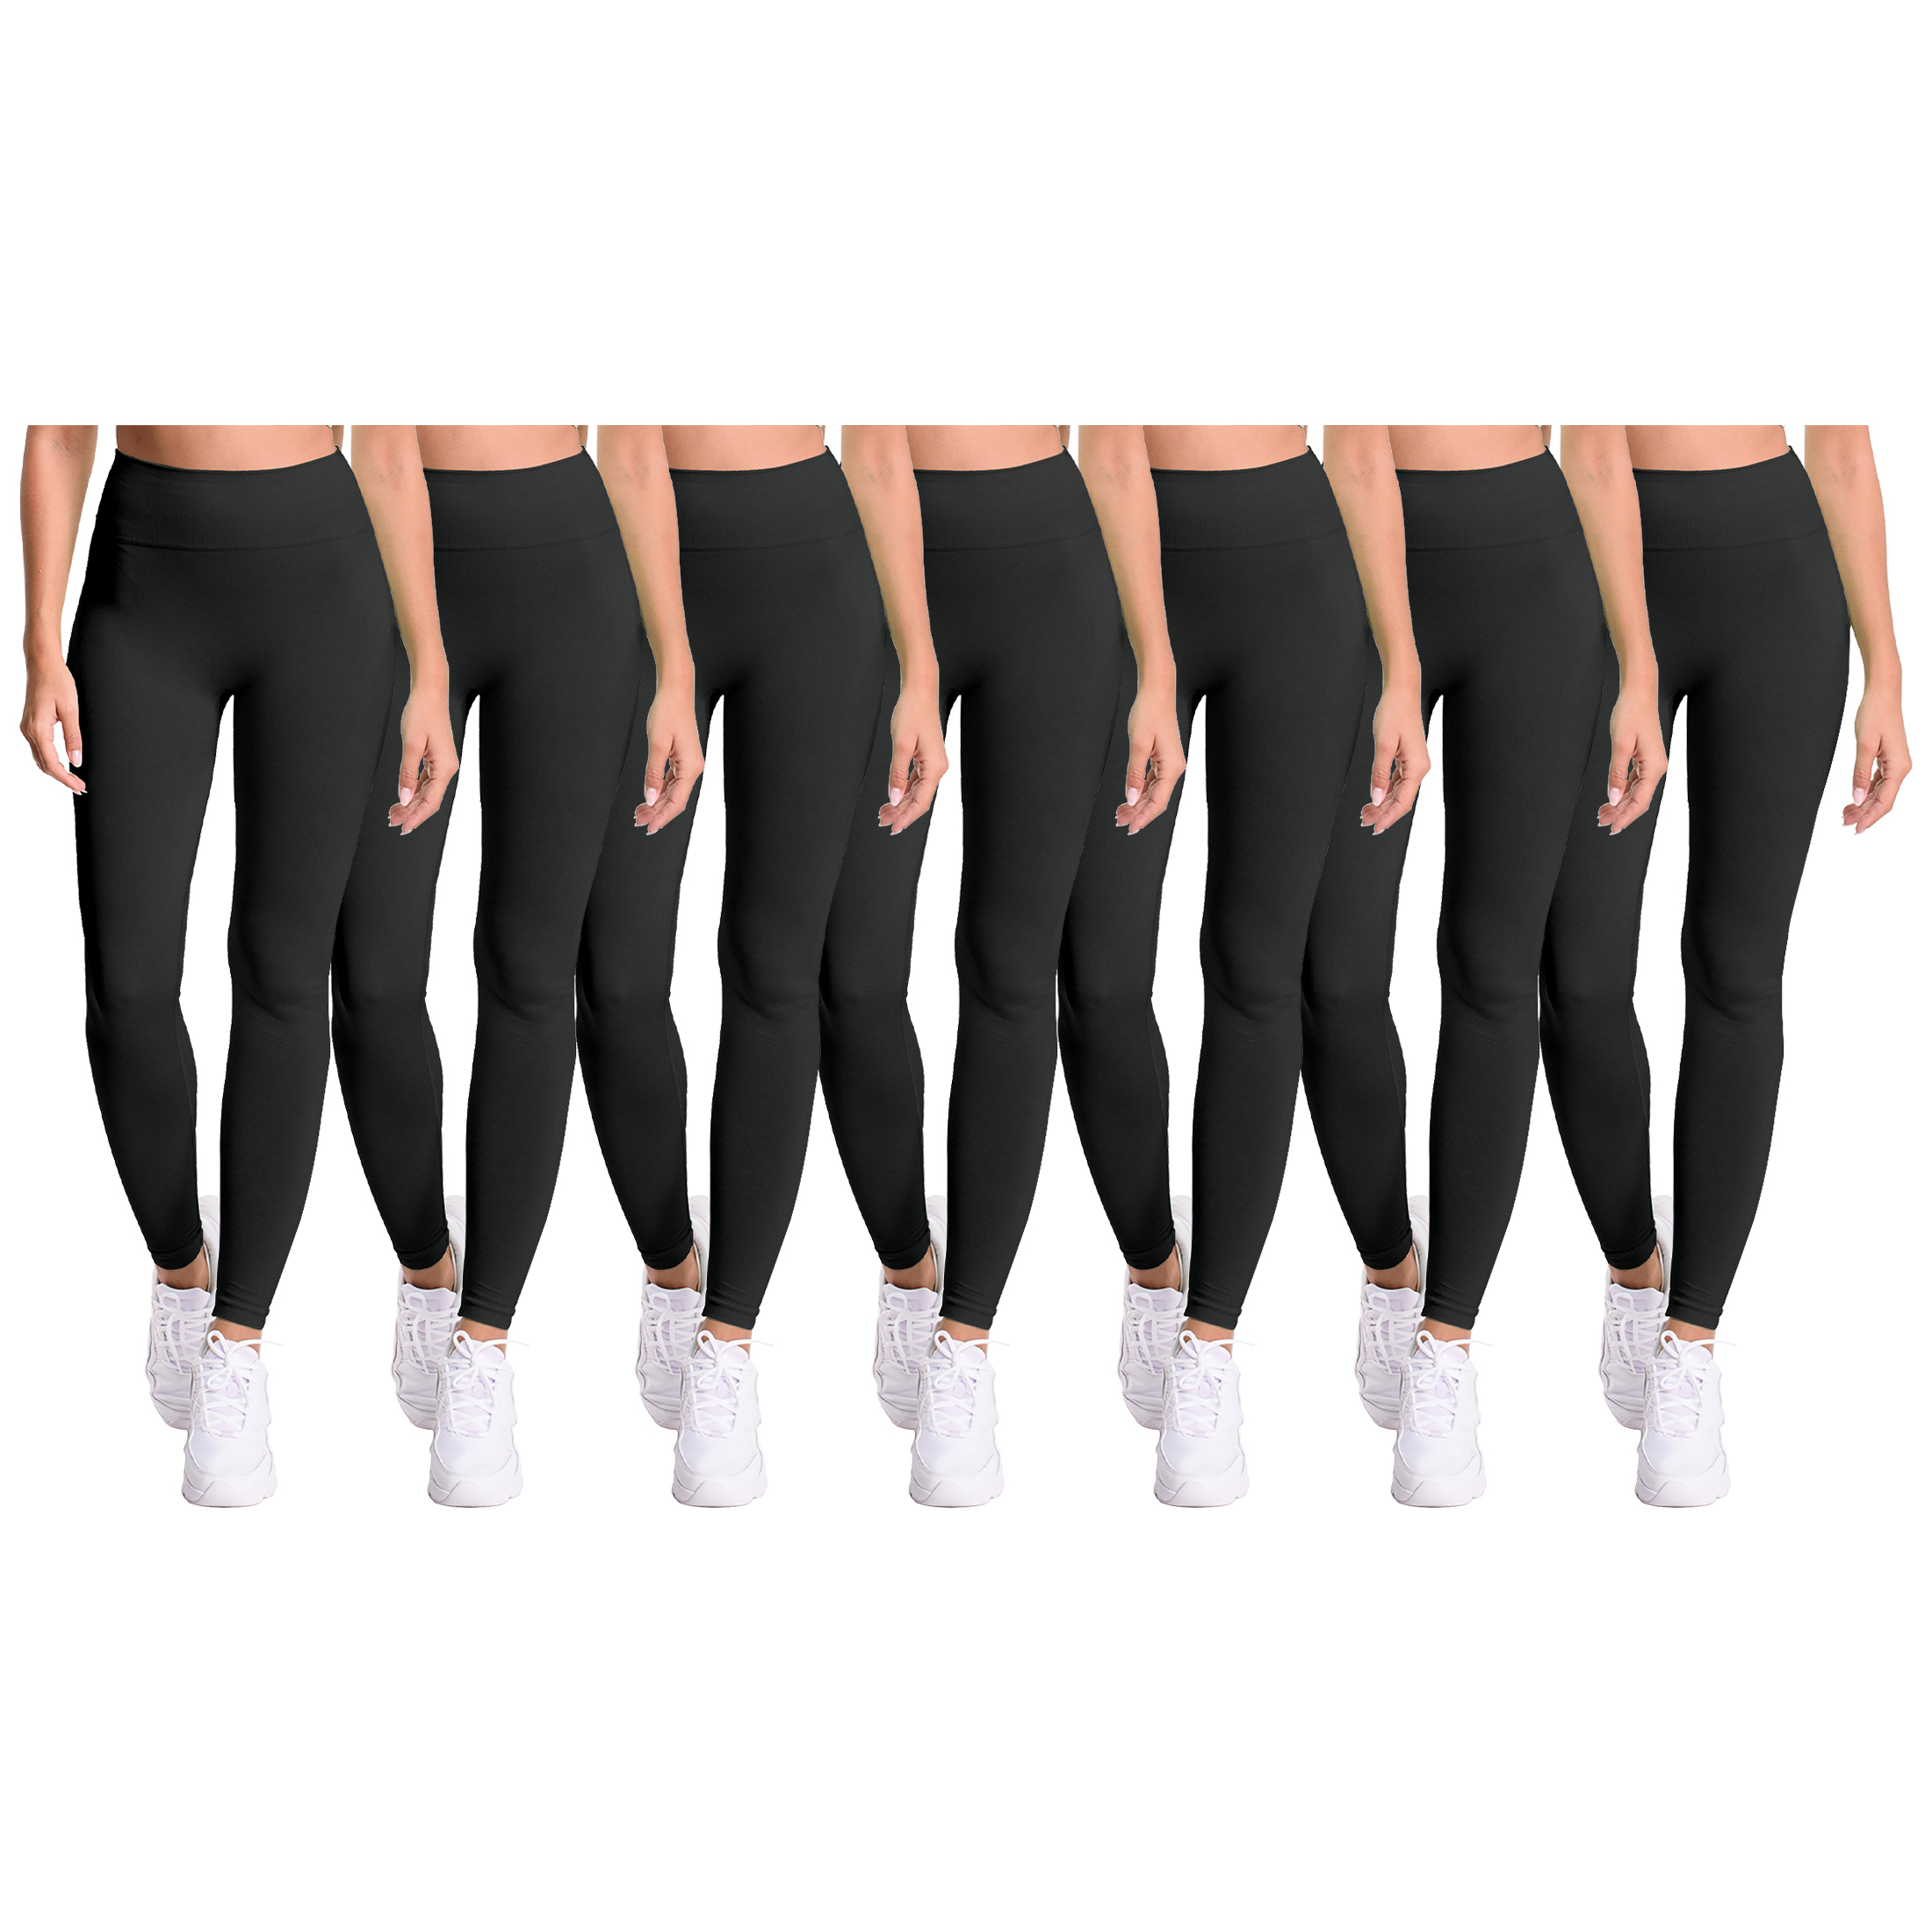 6-Pack: Women's Cozy Fleece-Lined Workout Yoga Pants Seamless Leggings - Black, Medium